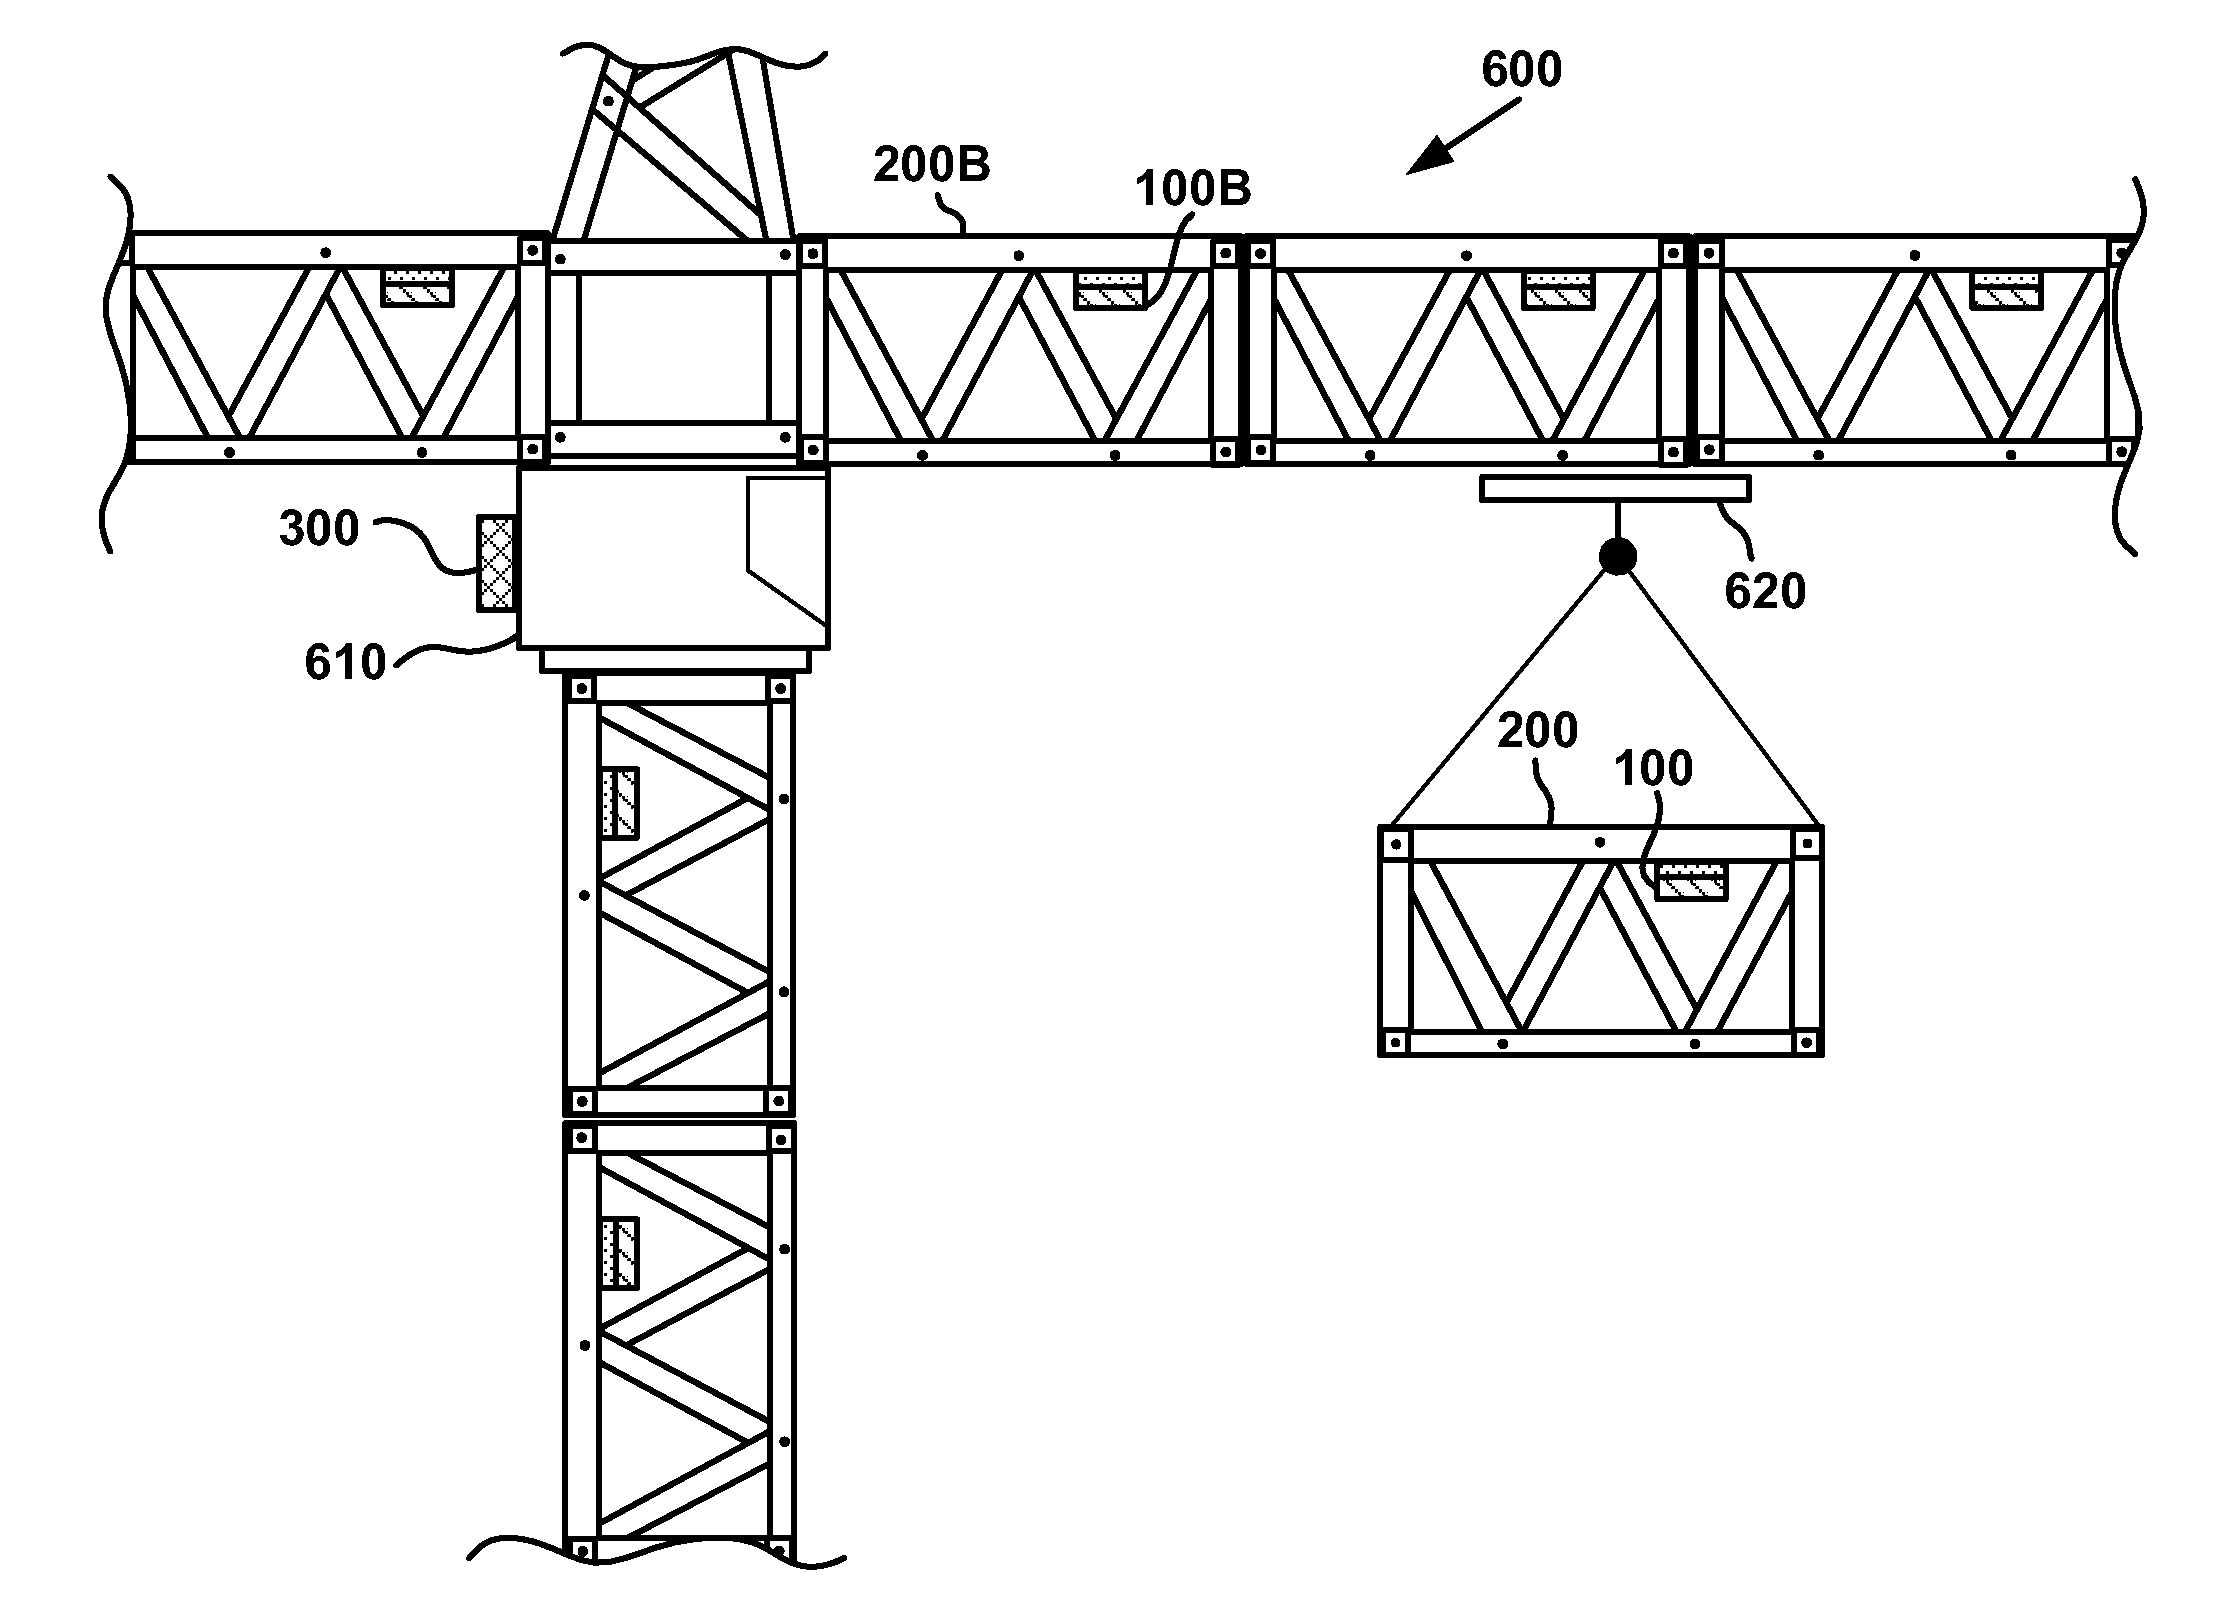 Monitoring crane component overstress